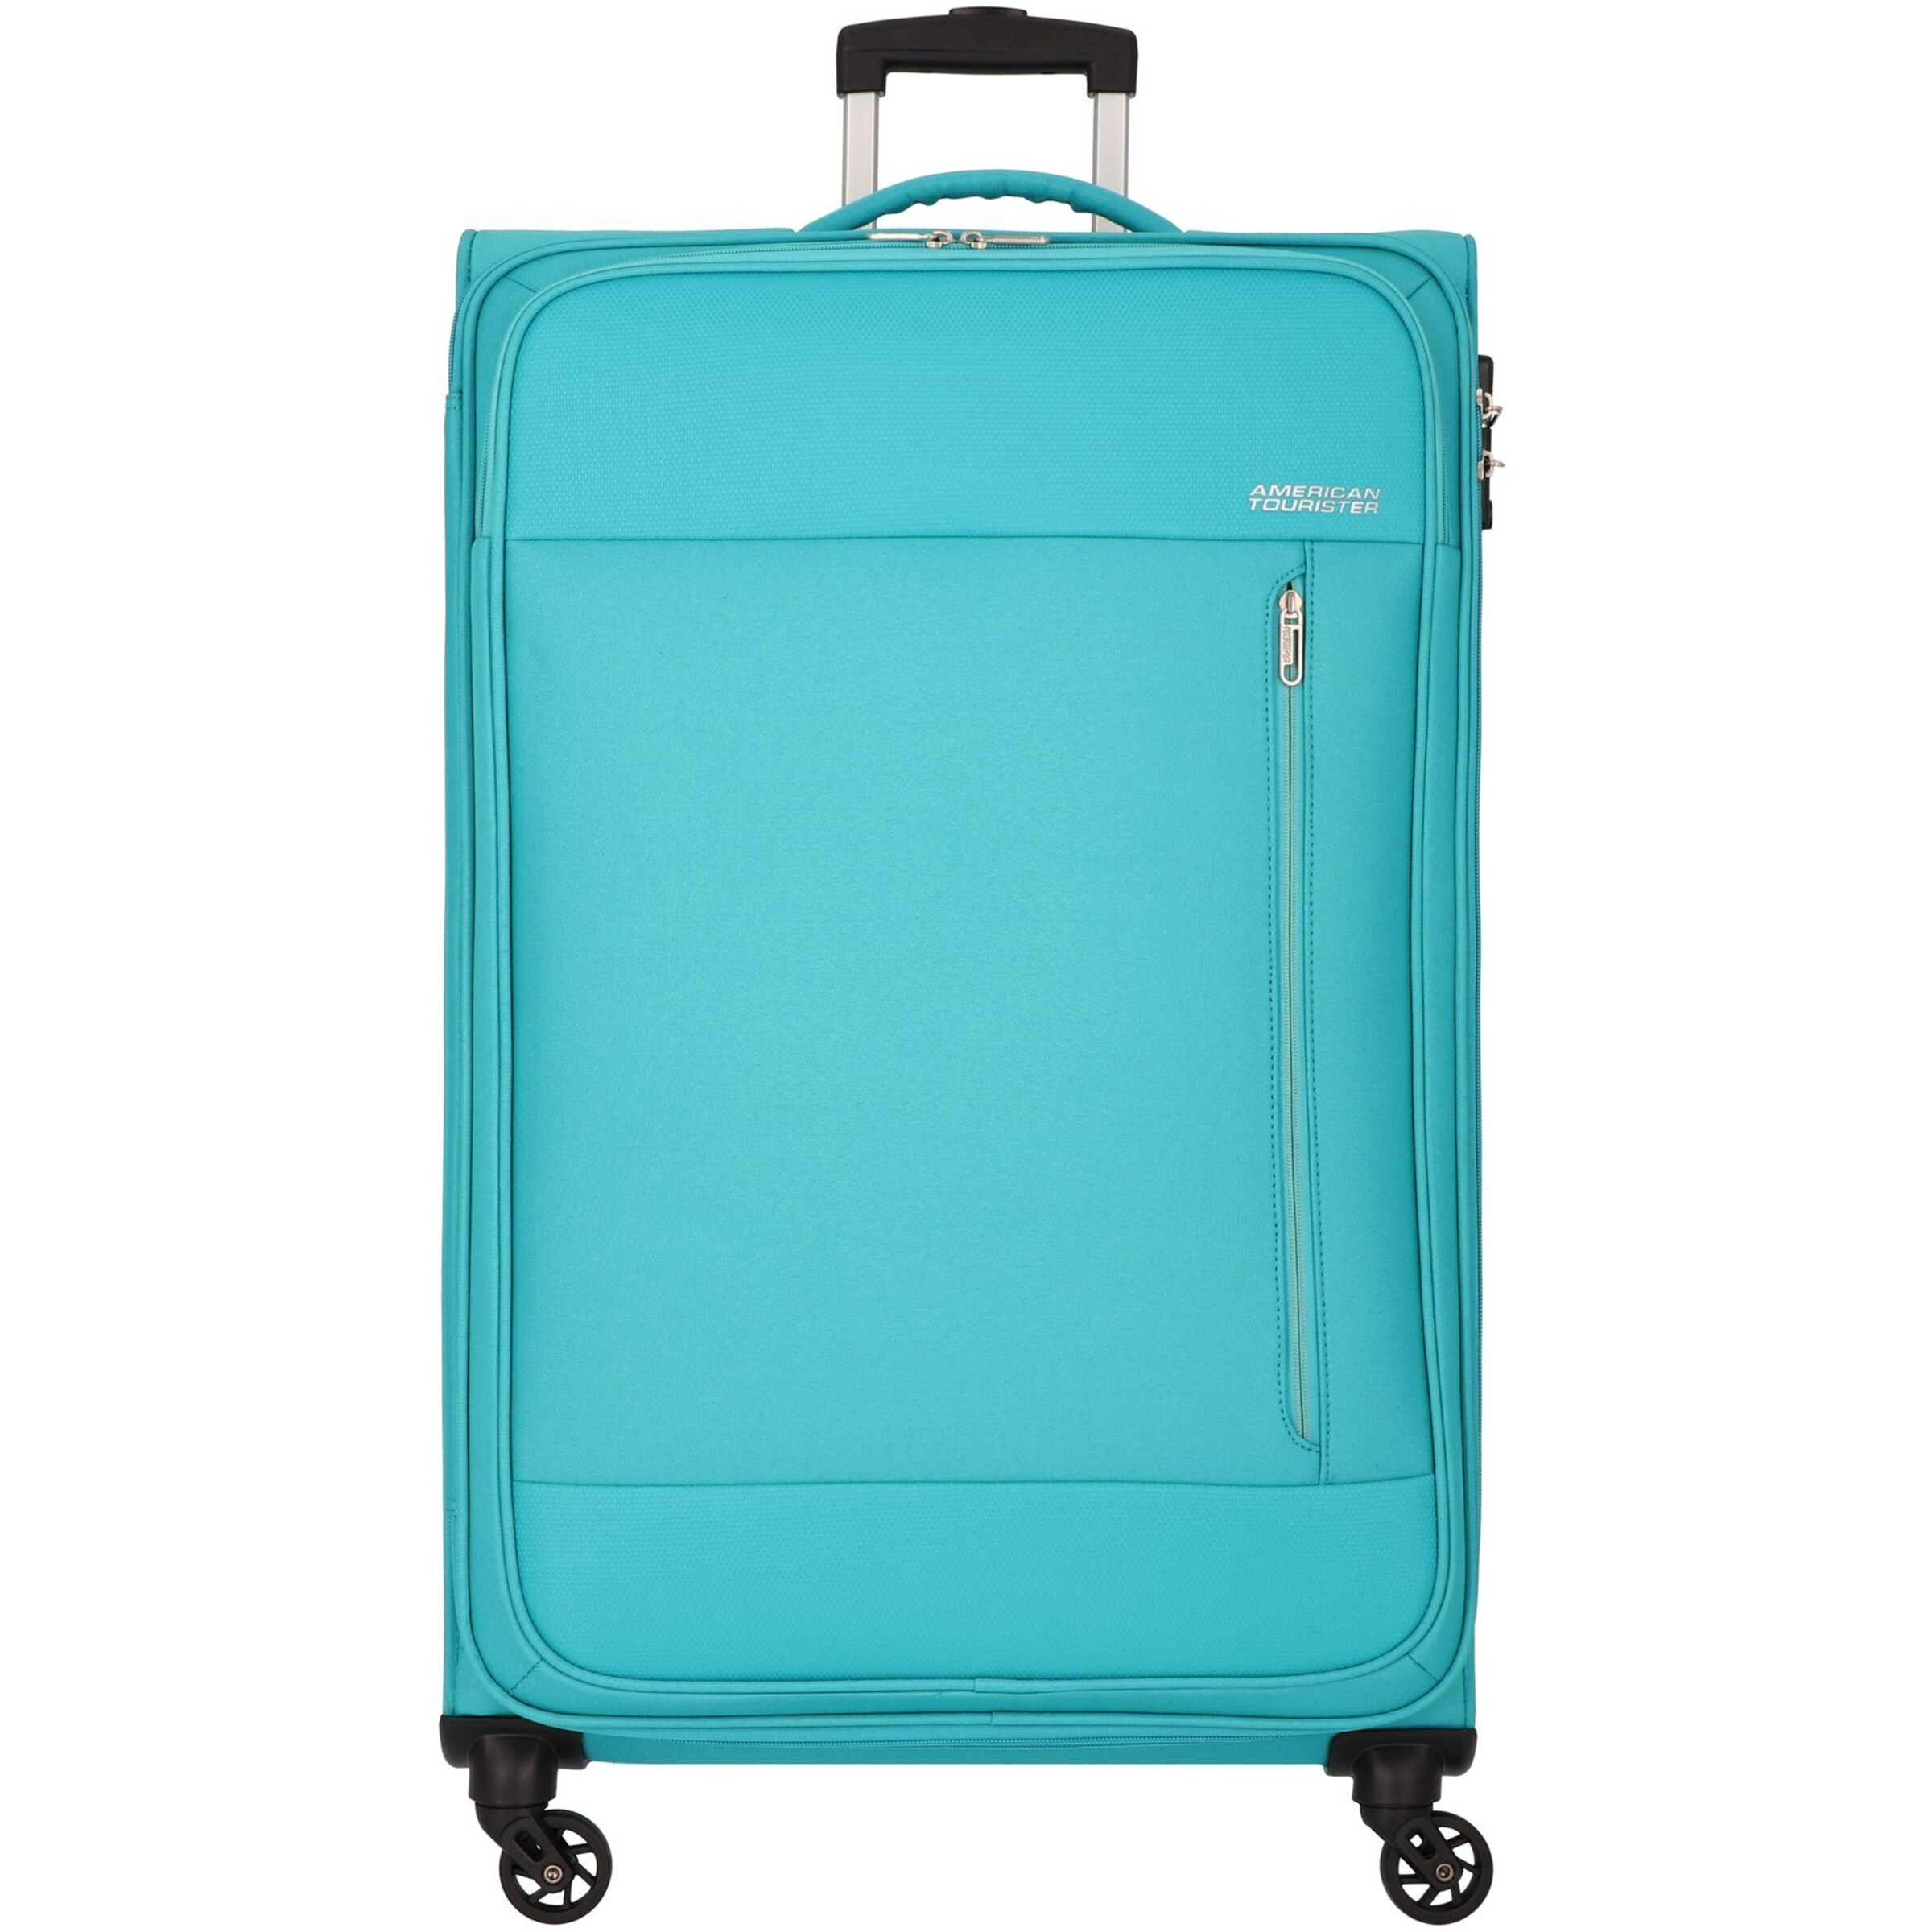 Blue Web Design American Tourister Luggage Strap Tassen & portemonnees Bagage & Reizen Bagageriemen White Luggage Straps   73" long Red 